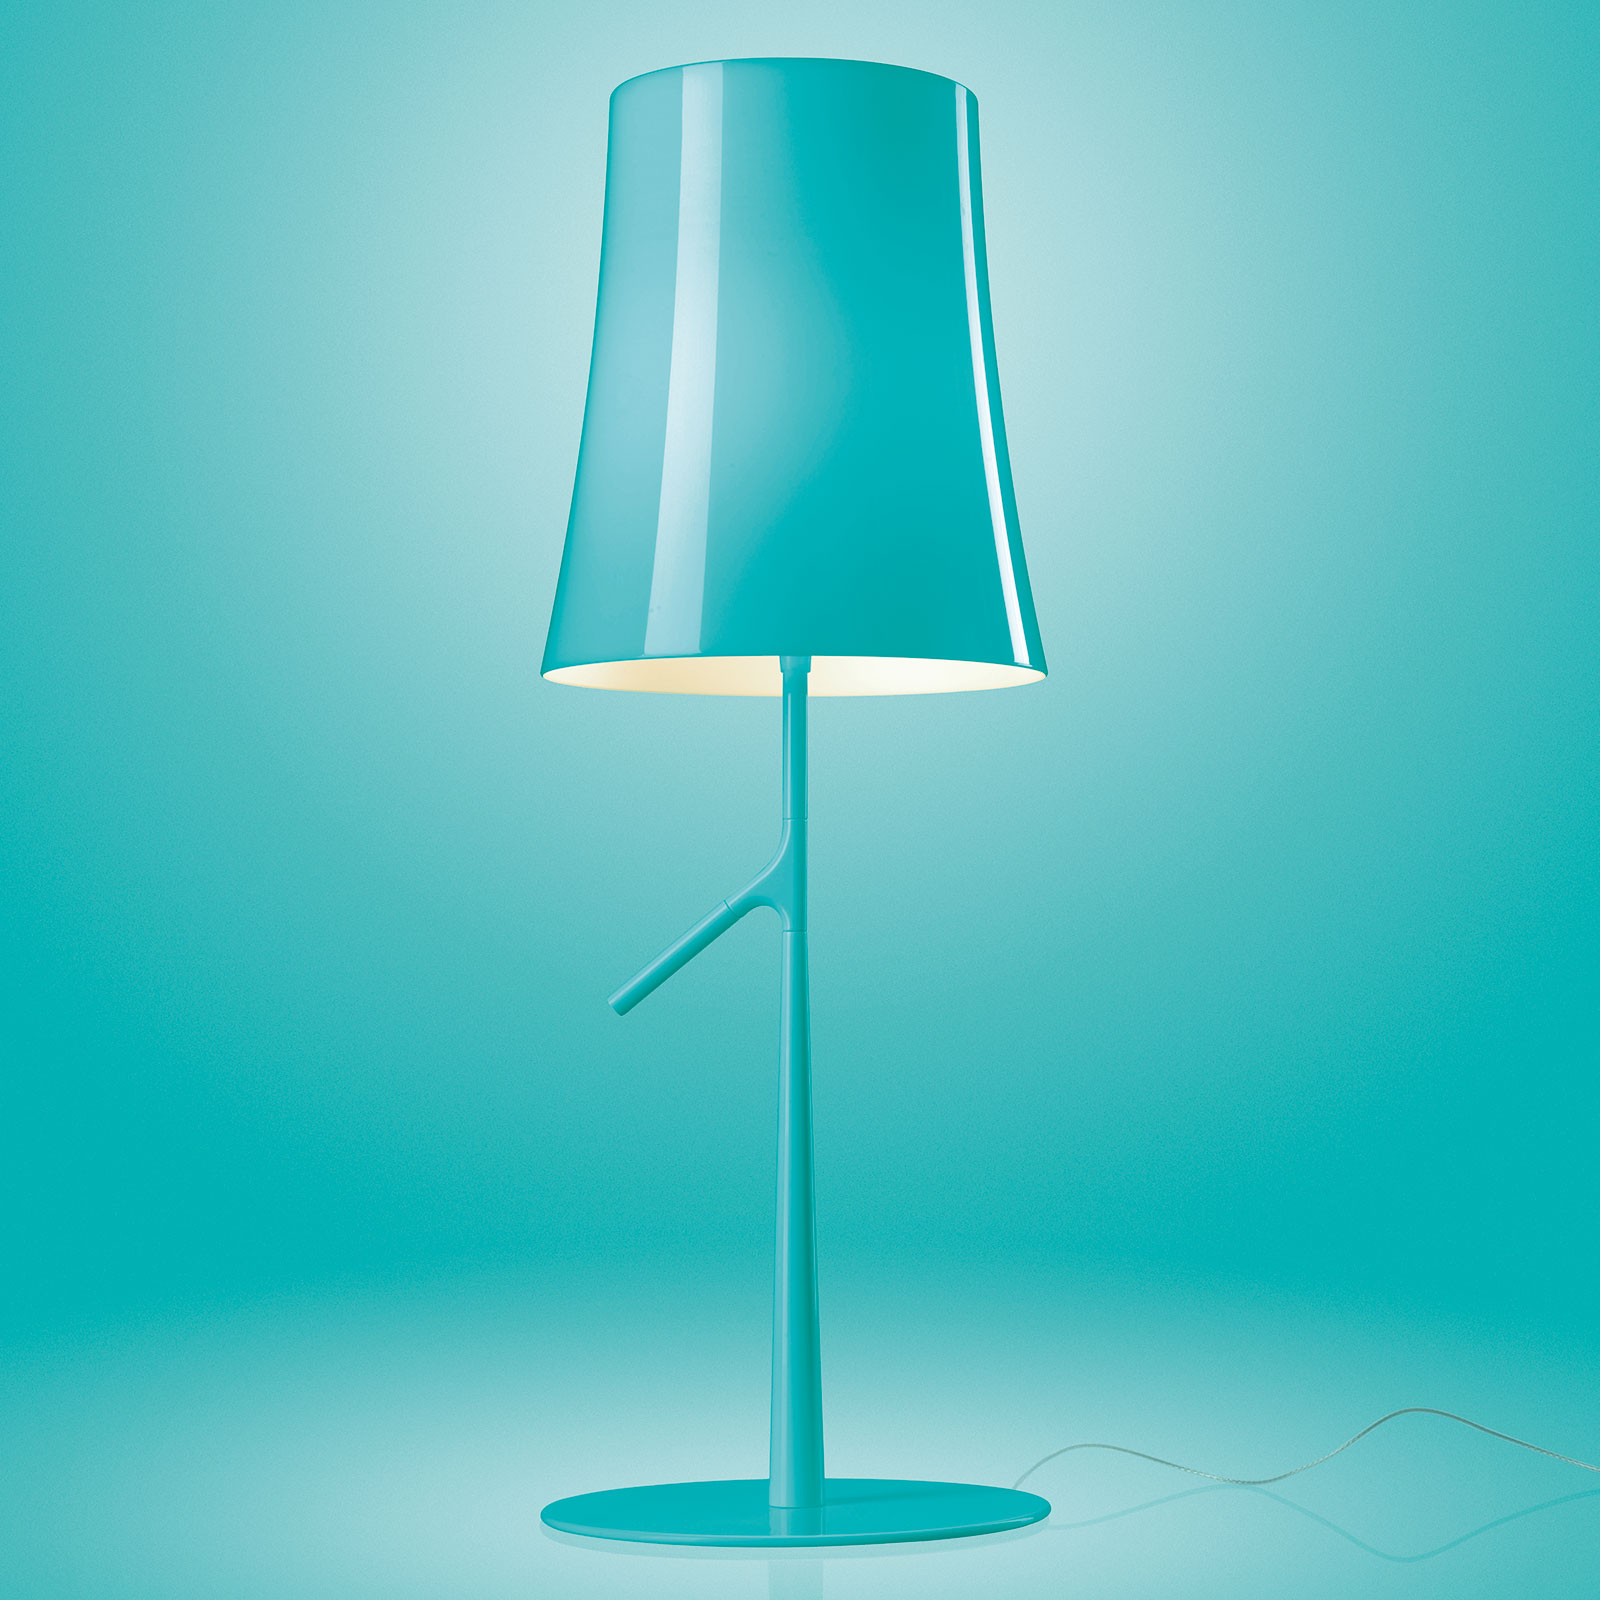 Foscarini Birdie LED grande stolní lampa akvamarín